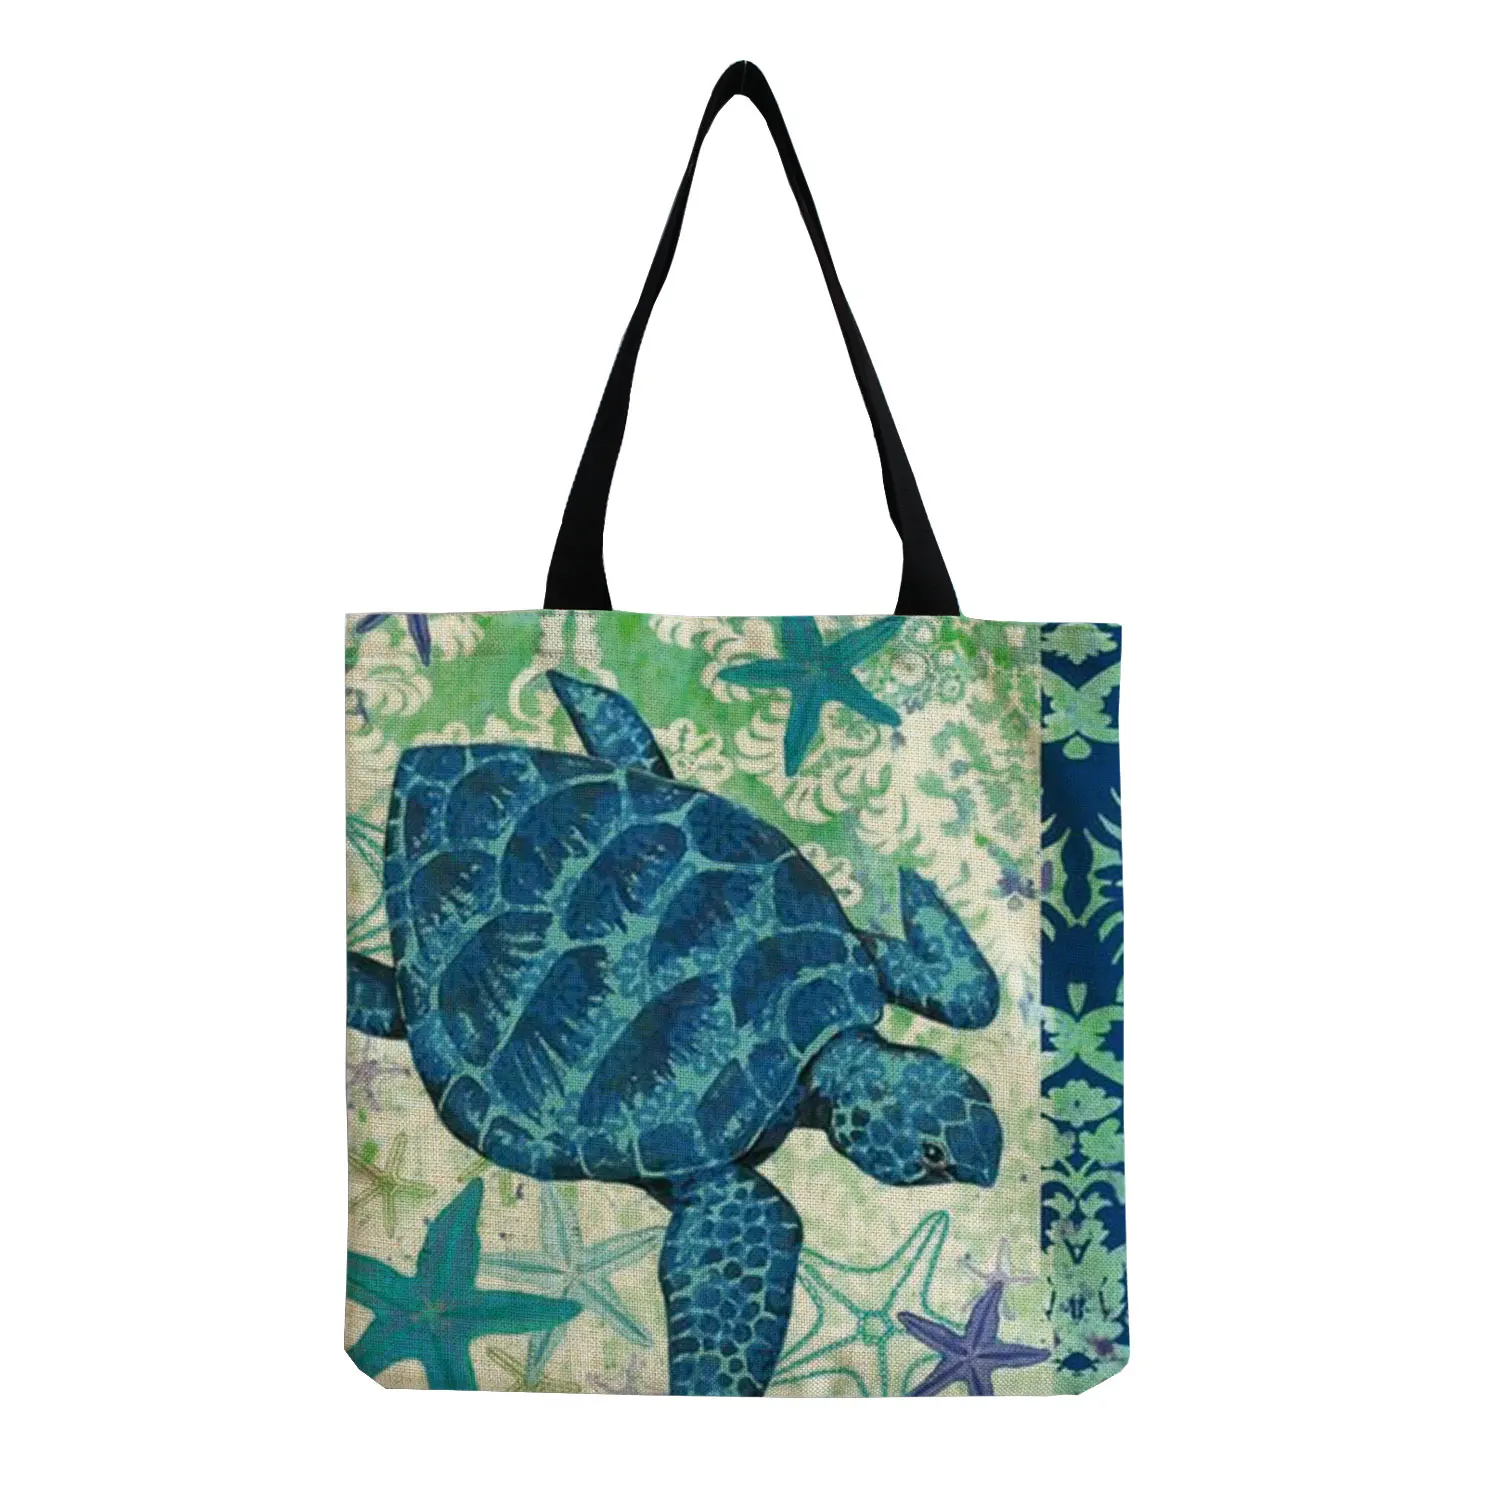 Casual Leisure Totes Bags Women Handbag Marine Animal Sea Turtle Horse Octopus Print Travel Shopping Shoulder Bag for Groceries 